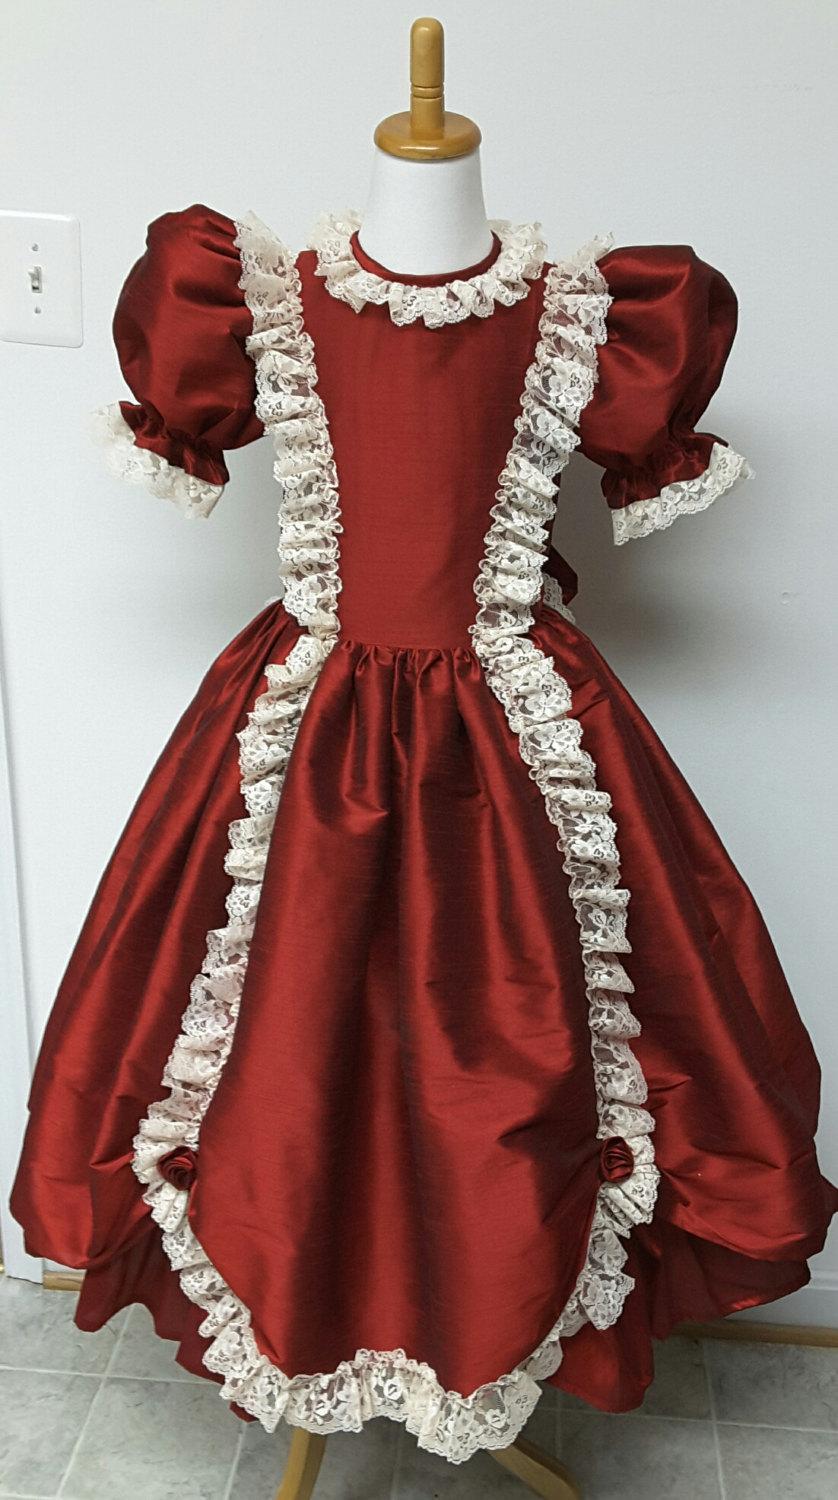 زفاف - Princess Dress with Ruffles. Lace. Puffy Sleeves. Girls Victorian Style Dress. Weddings, Birthday. Ballet. Optional Pantaloons available